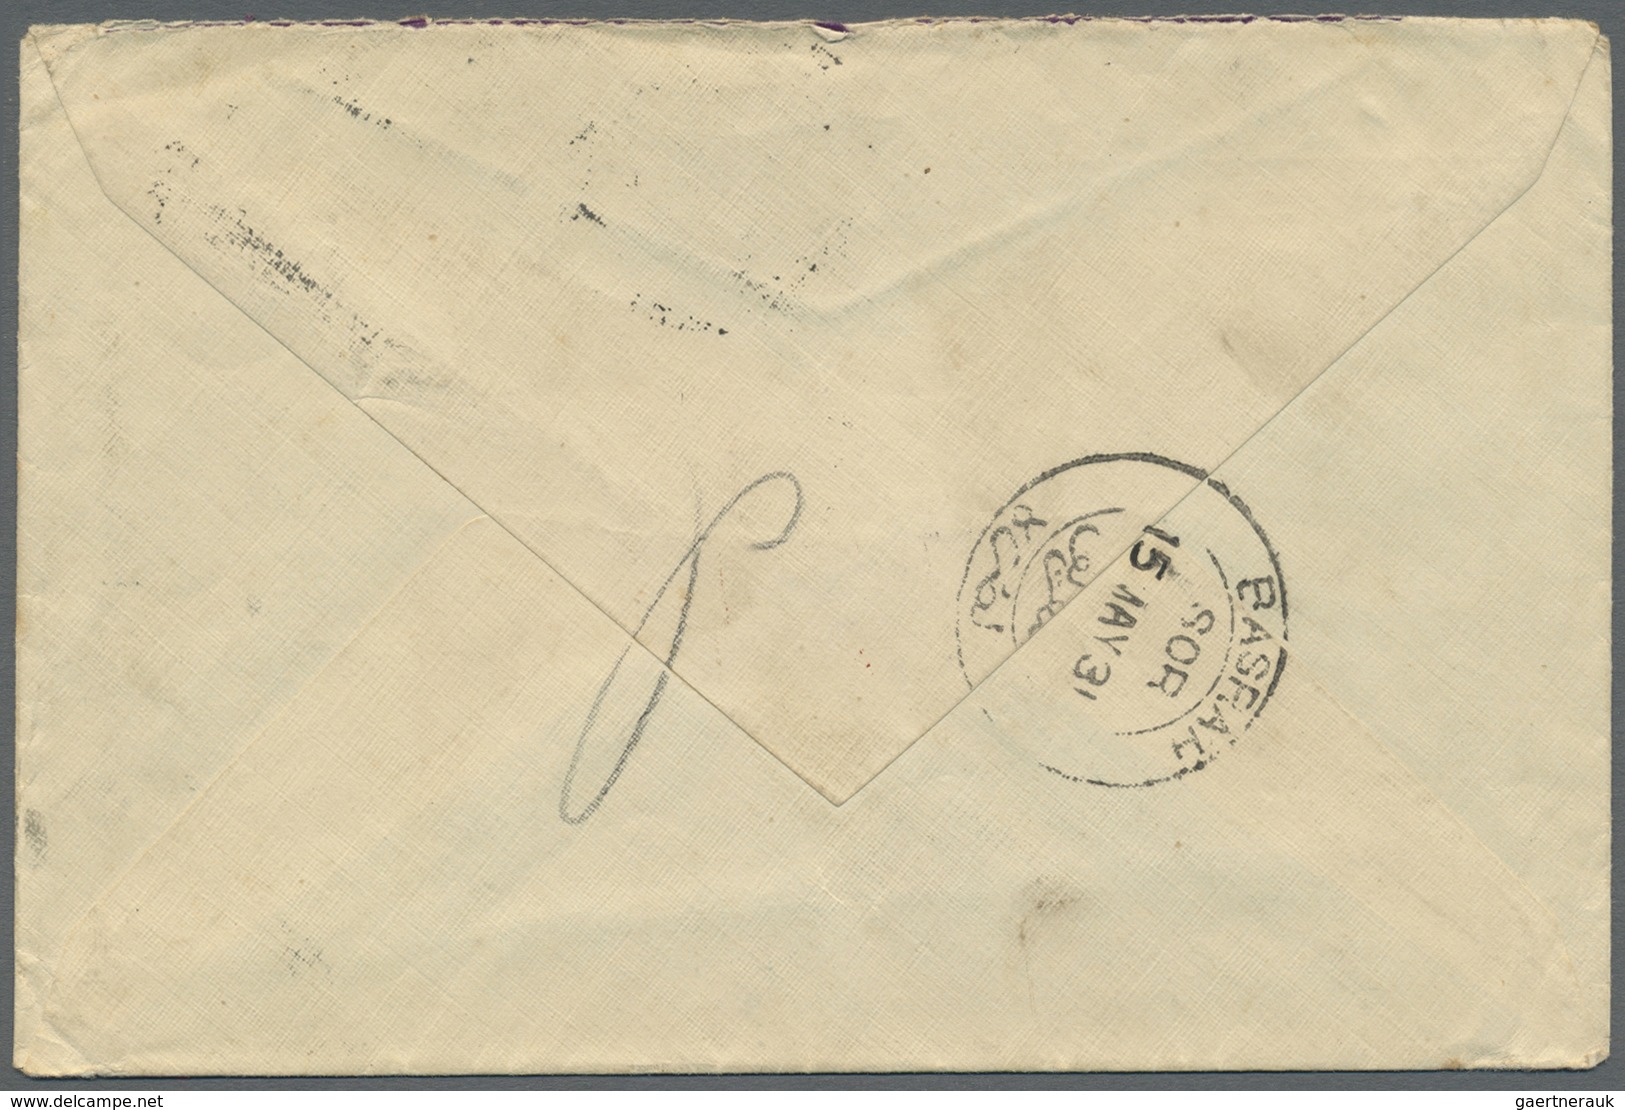 Br Irak: 1931. Air Mail Envelope (Bagdad-London) Addresed To England Bearing Iraq SG 86, 6a Blue/green - Irak